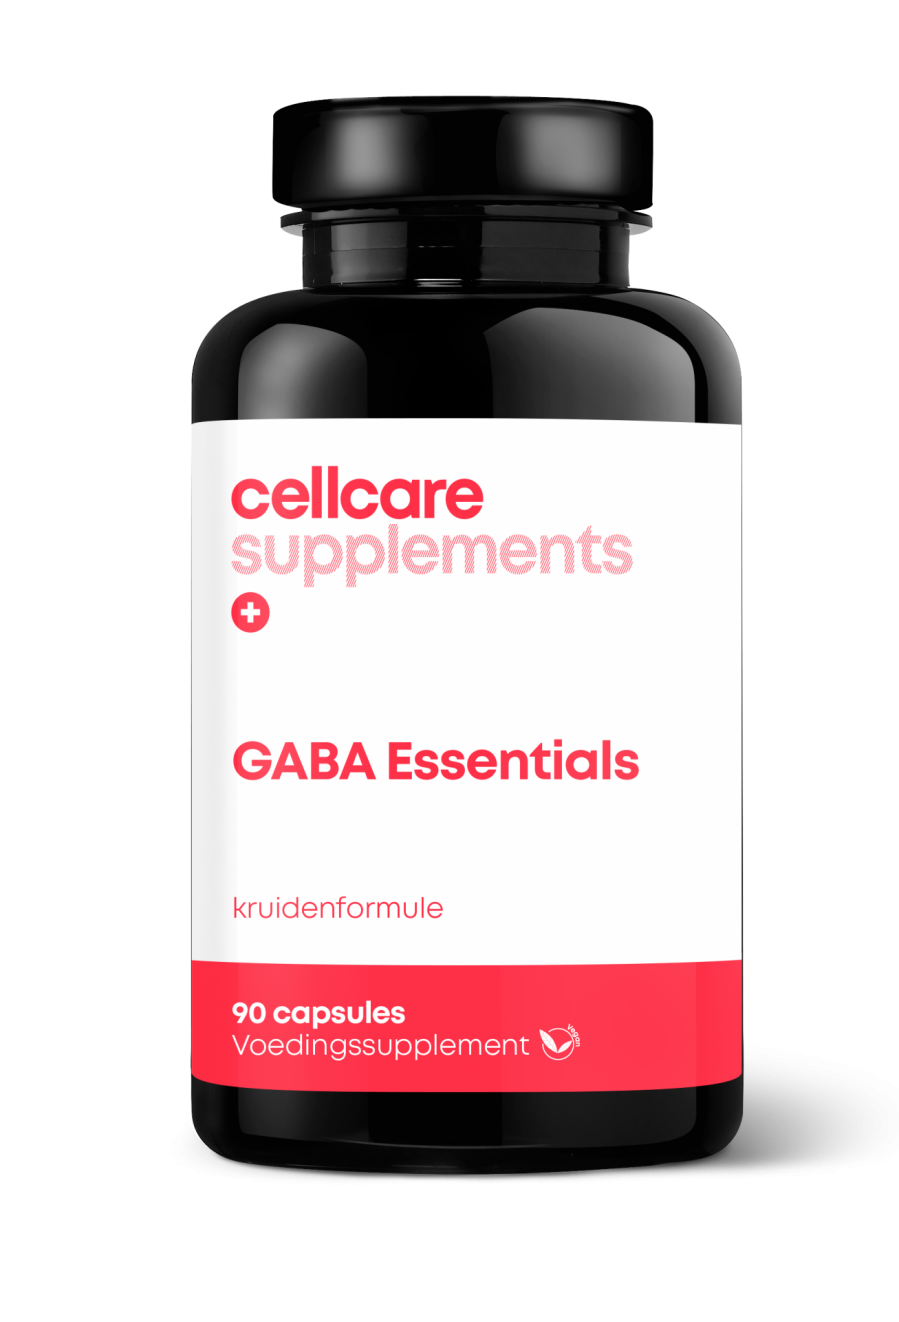 gaba essentials 90 capsules a6296 x1920